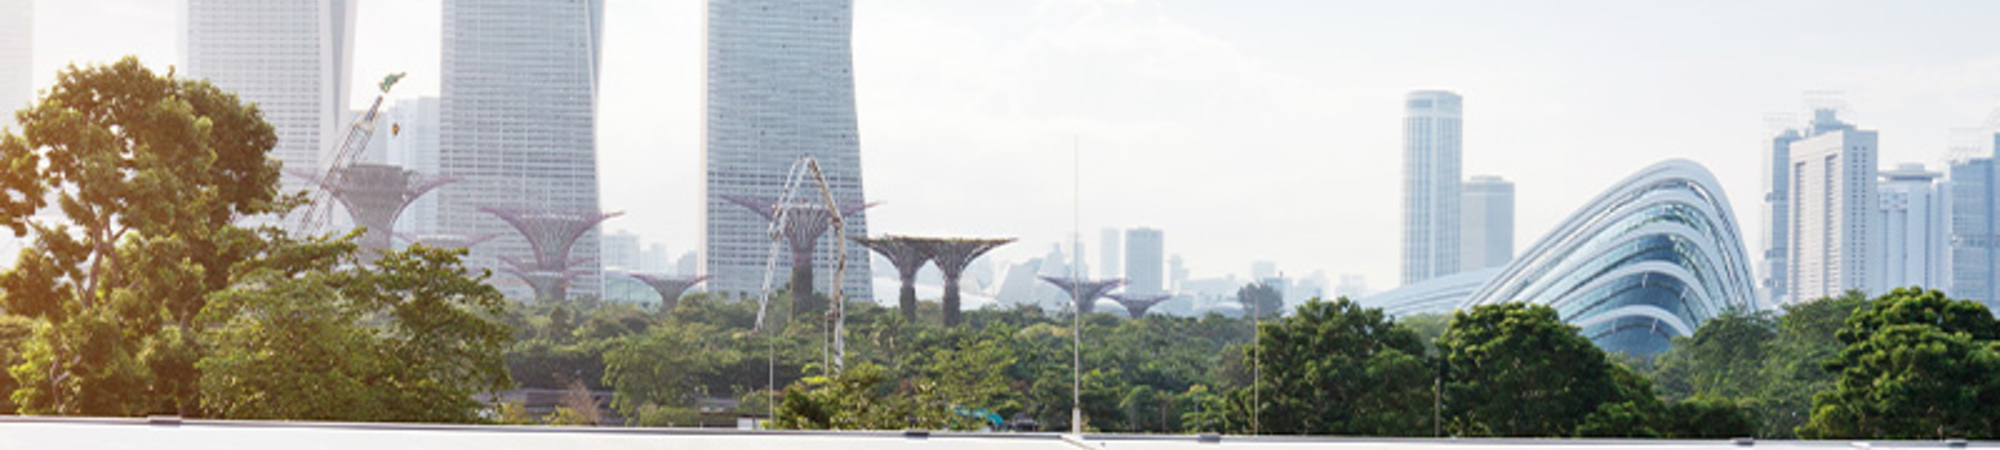 Singapore Renewable Energy Blog 800x800